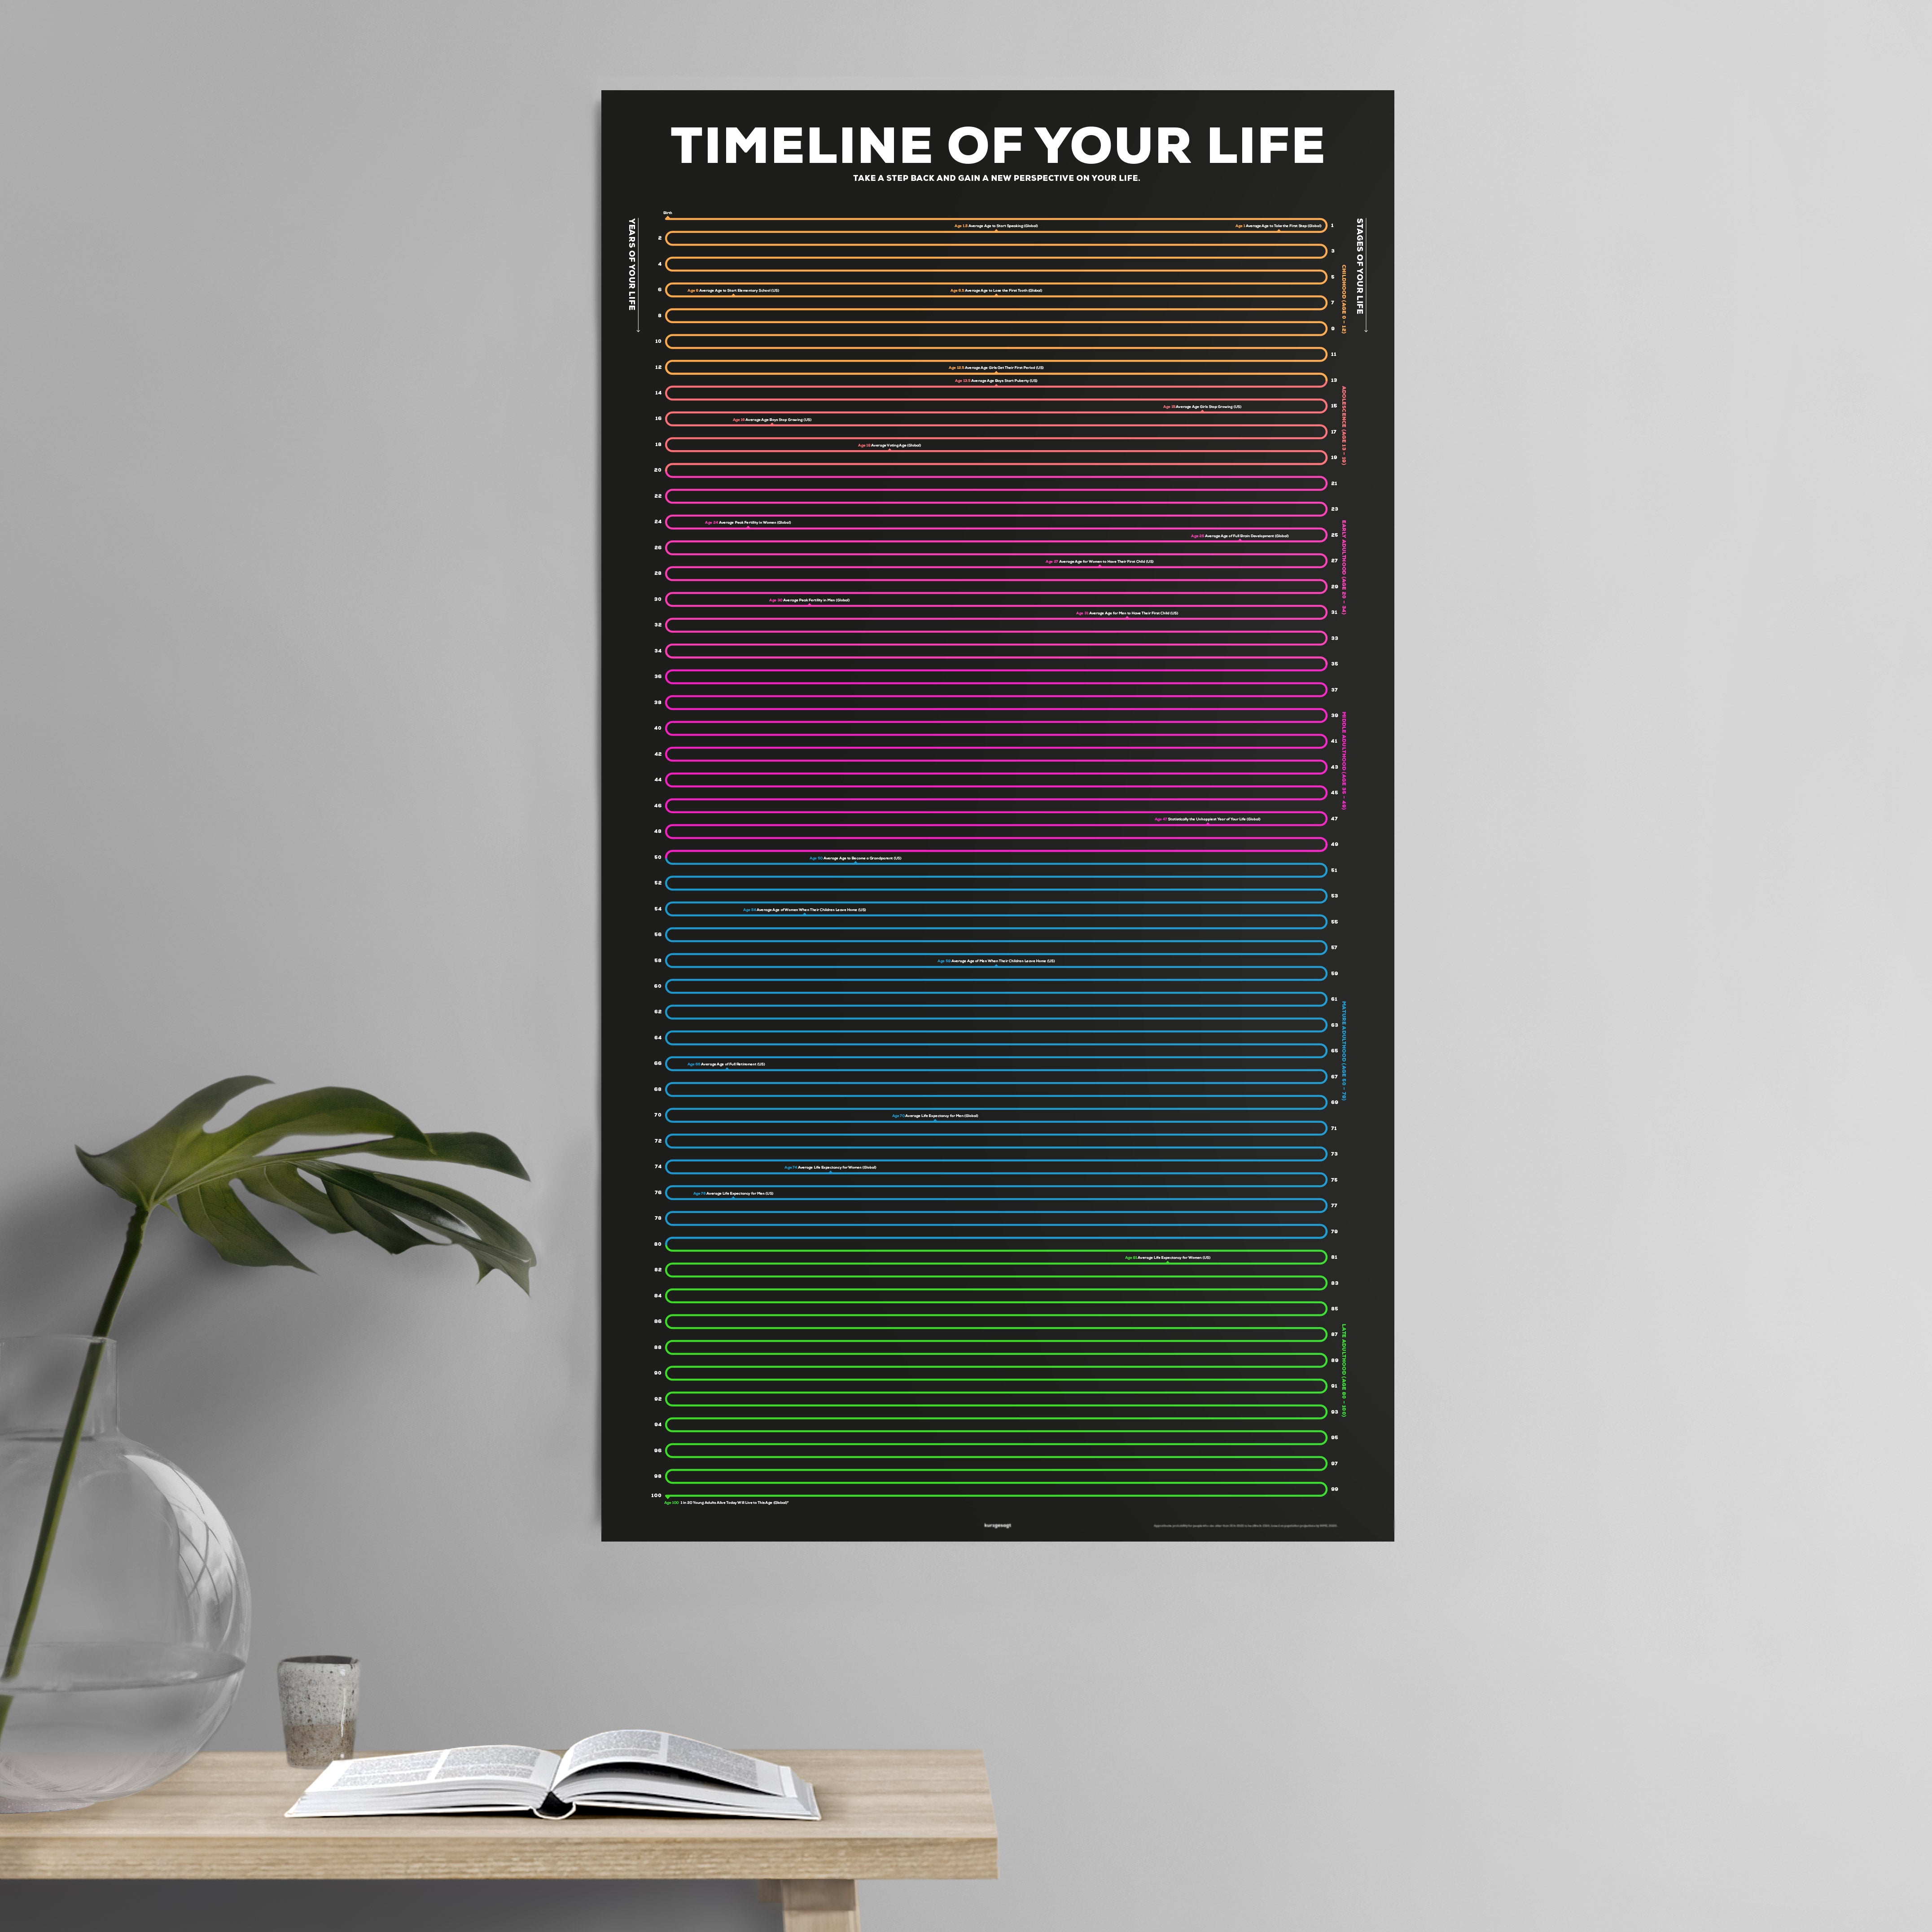 Timeline of Your Life Infographic Poster in a nutshellkurzgesagt